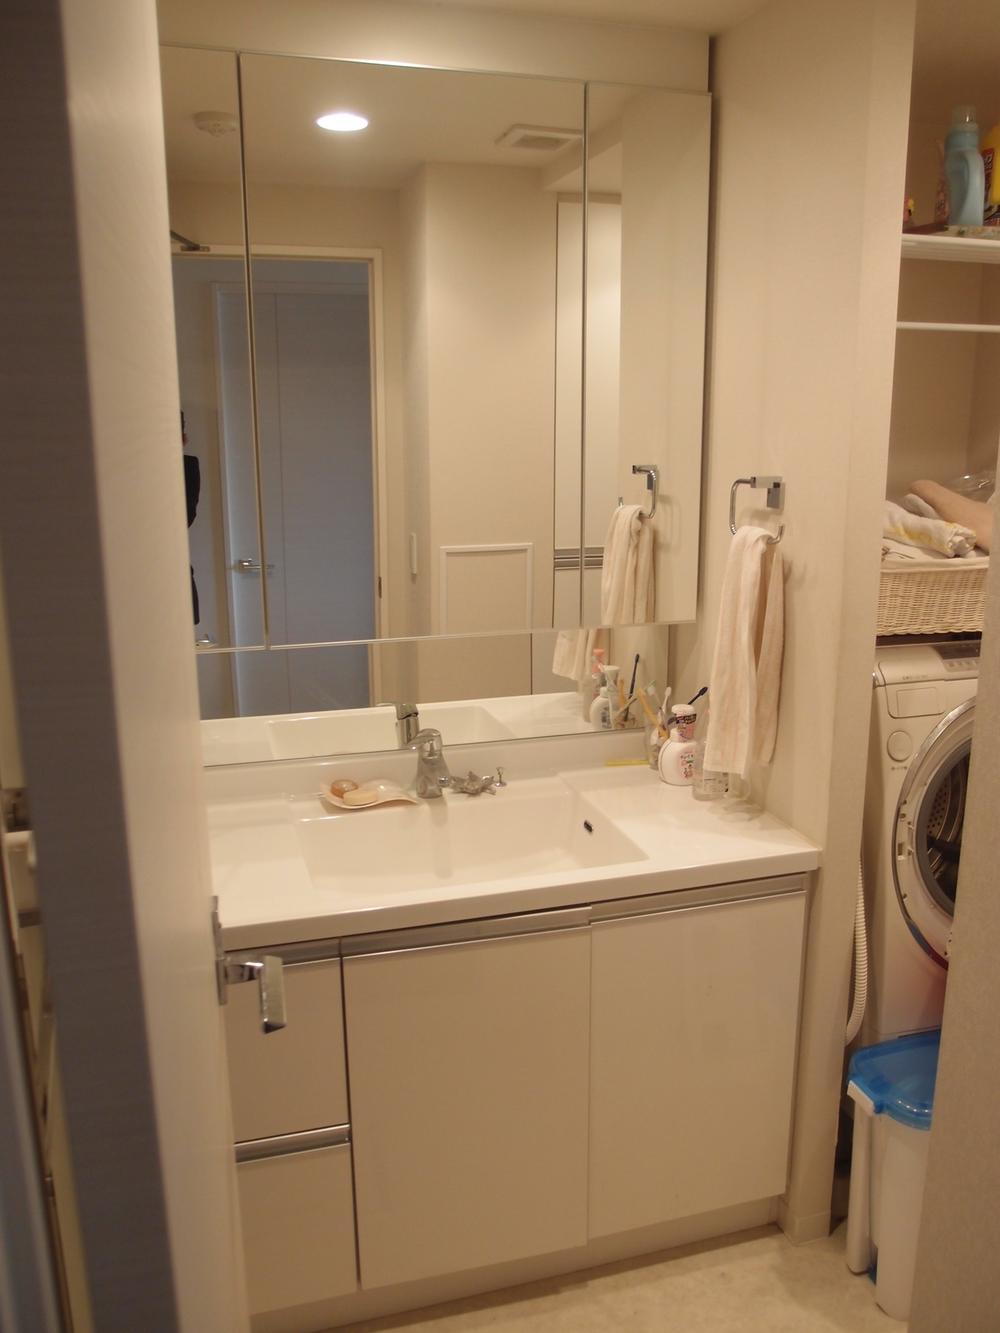 Wash basin, toilet. Three-sided mirror with vanity